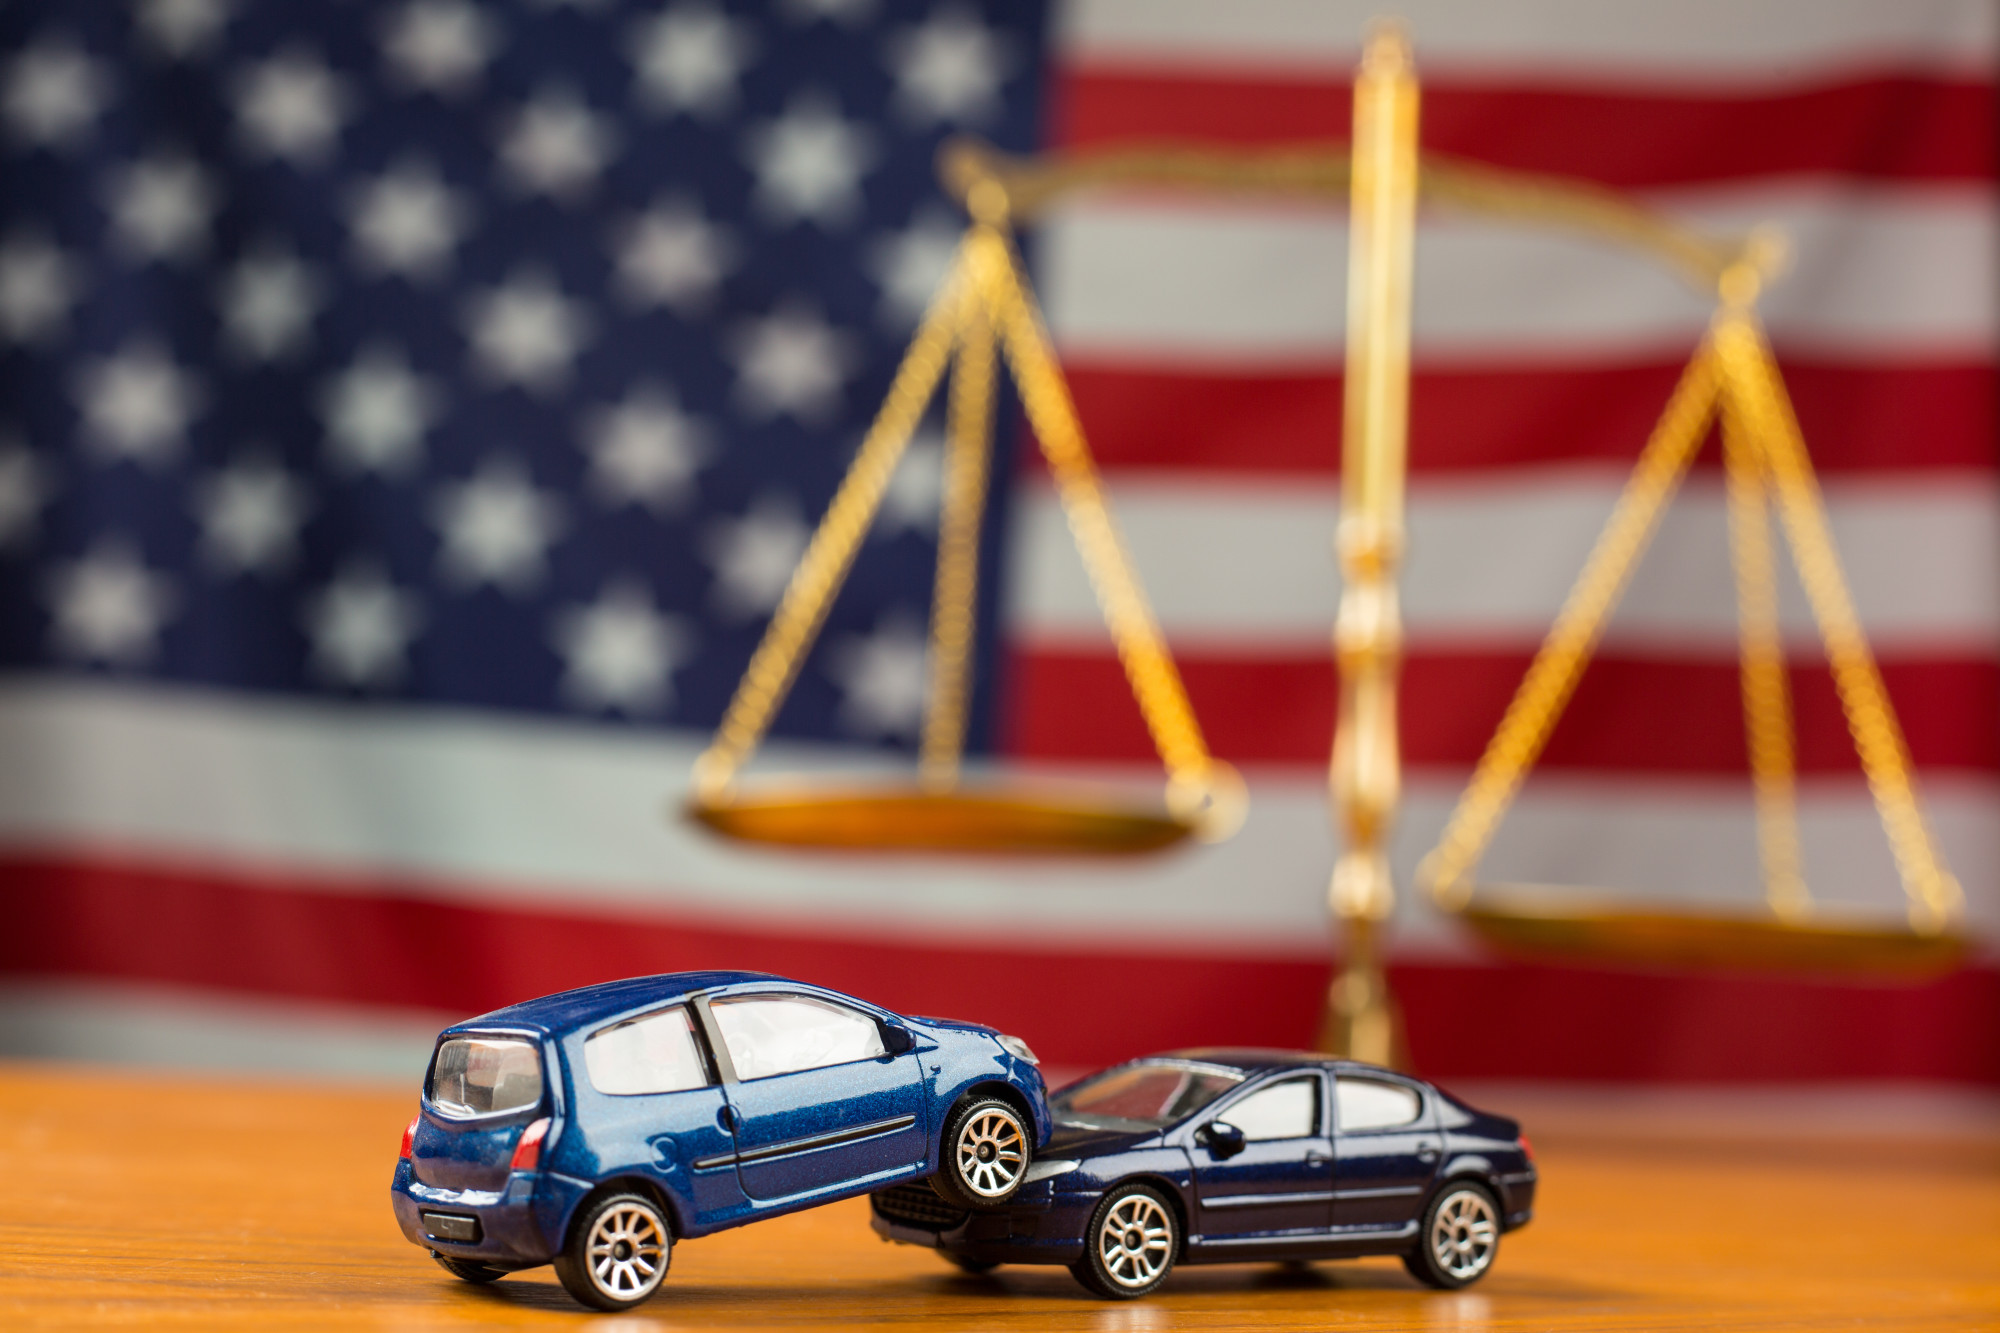 7 Major Benefits of Hiring a Virginia Traffic Attorney